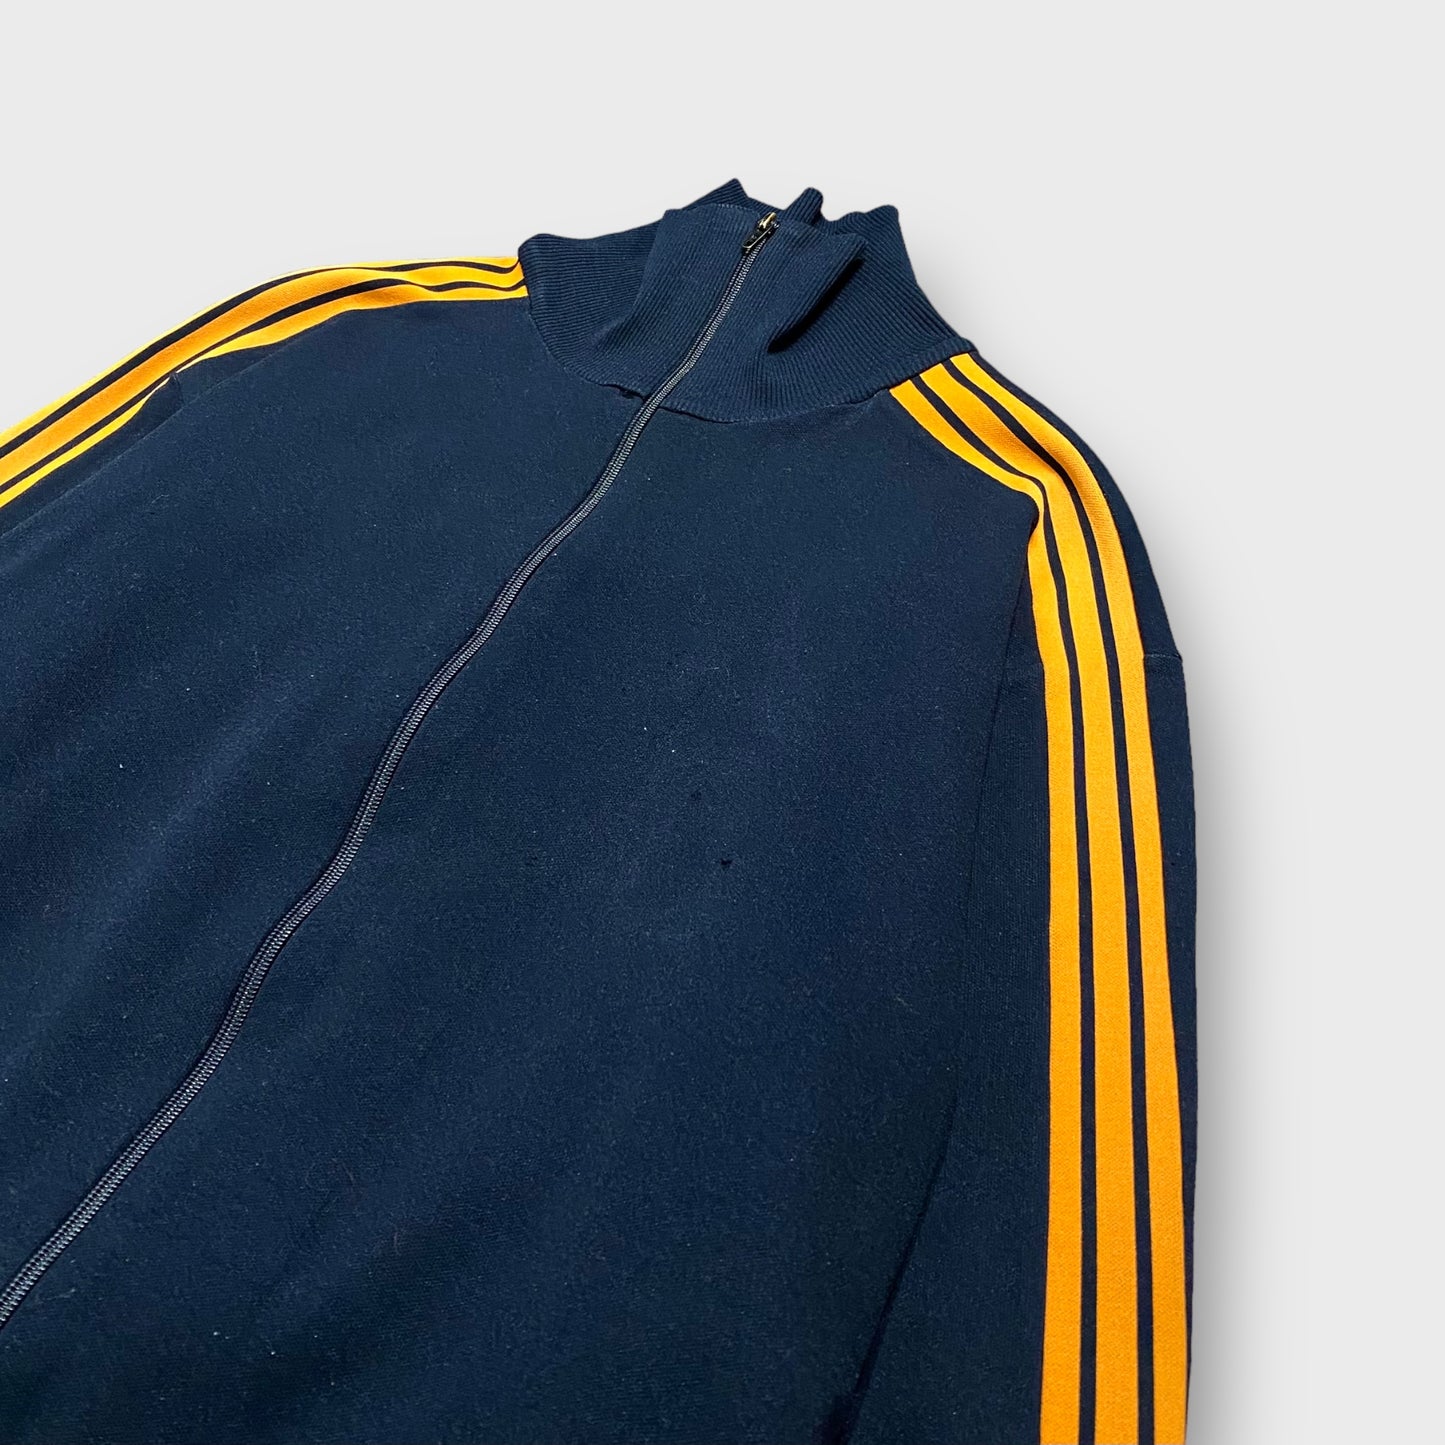 70-80's "adidas" Track jacket